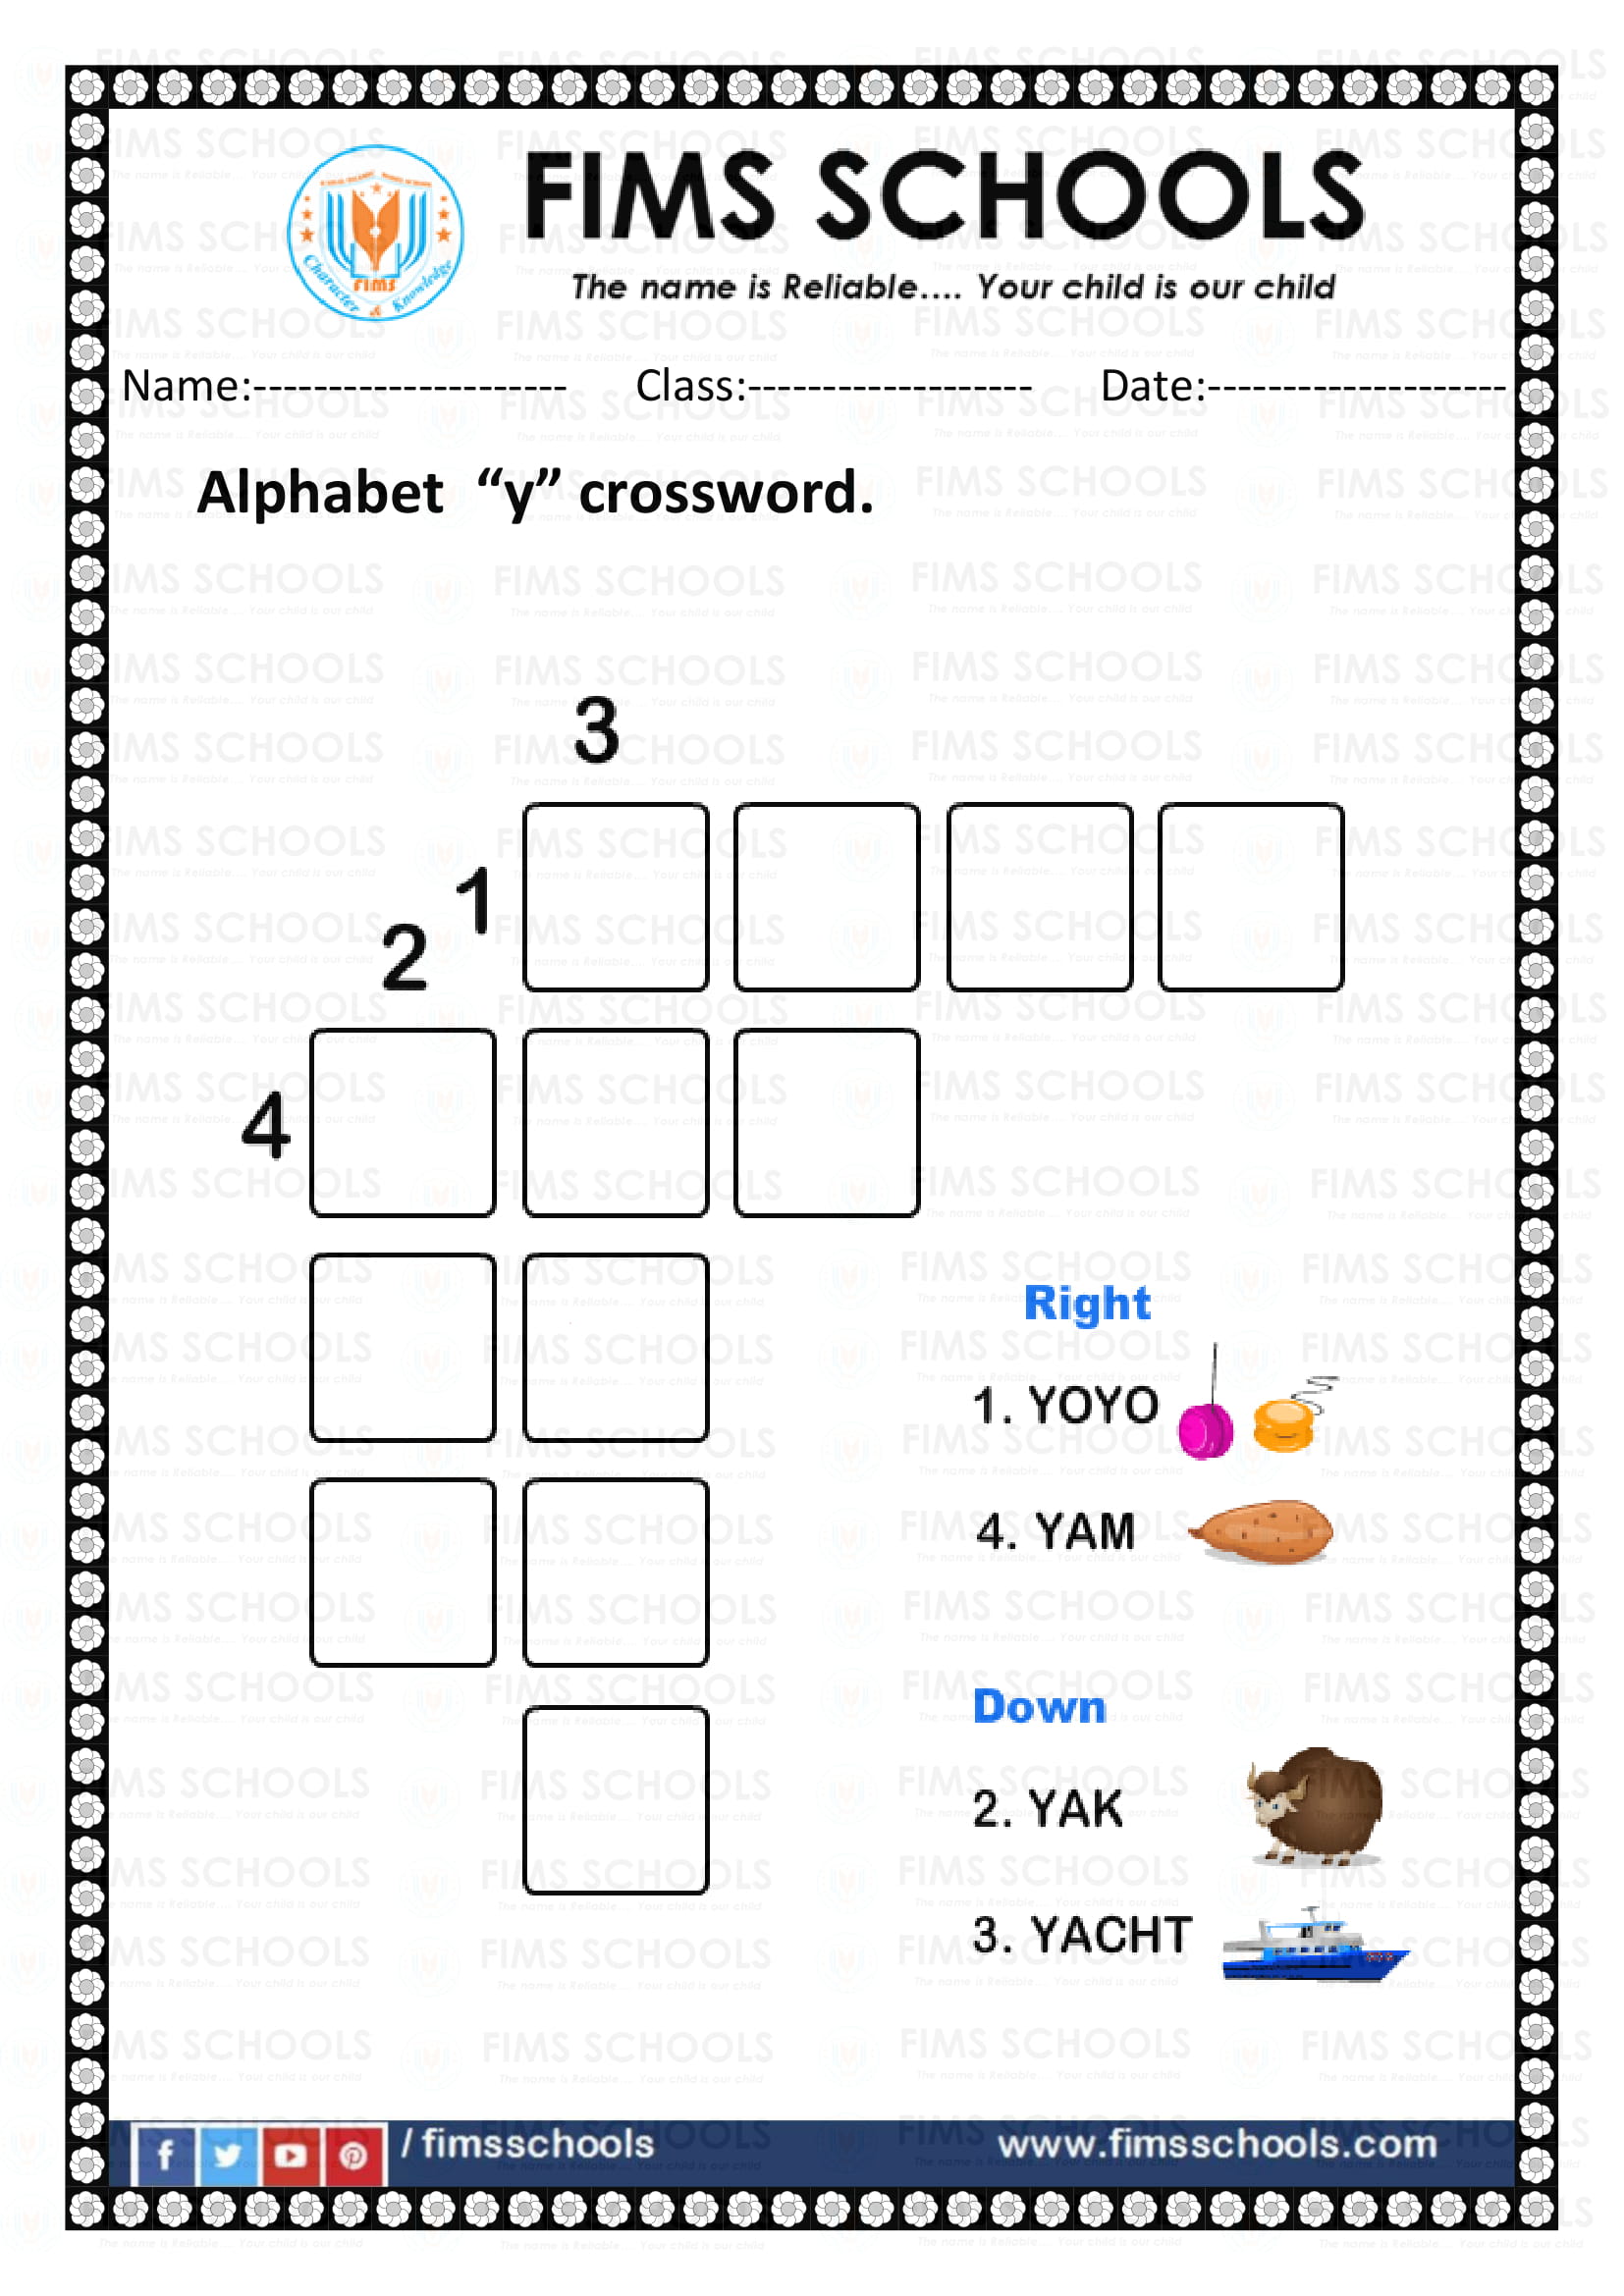 Alphabet A - Z crossword - Preschool FIMS SCHOOLS ...